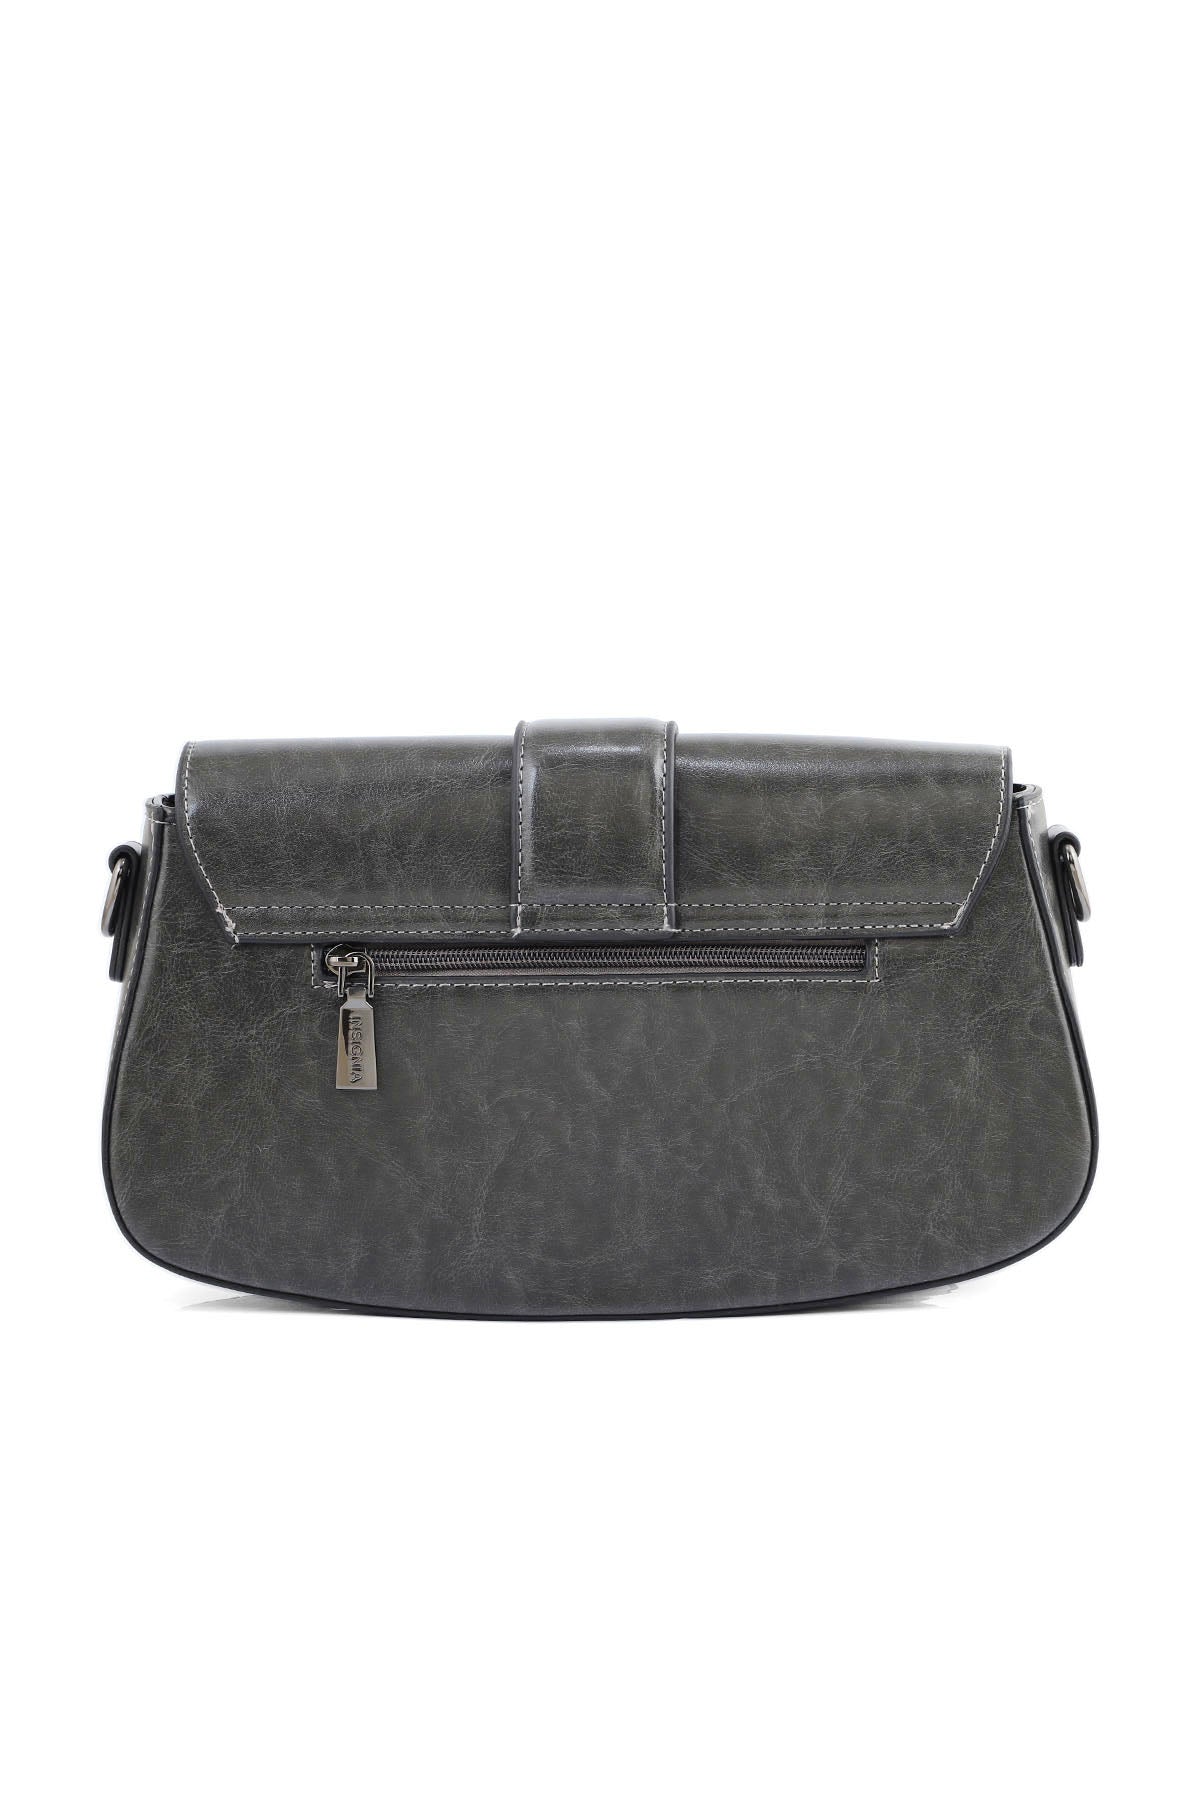 Baguette Shoulder Bags B14978-Grey